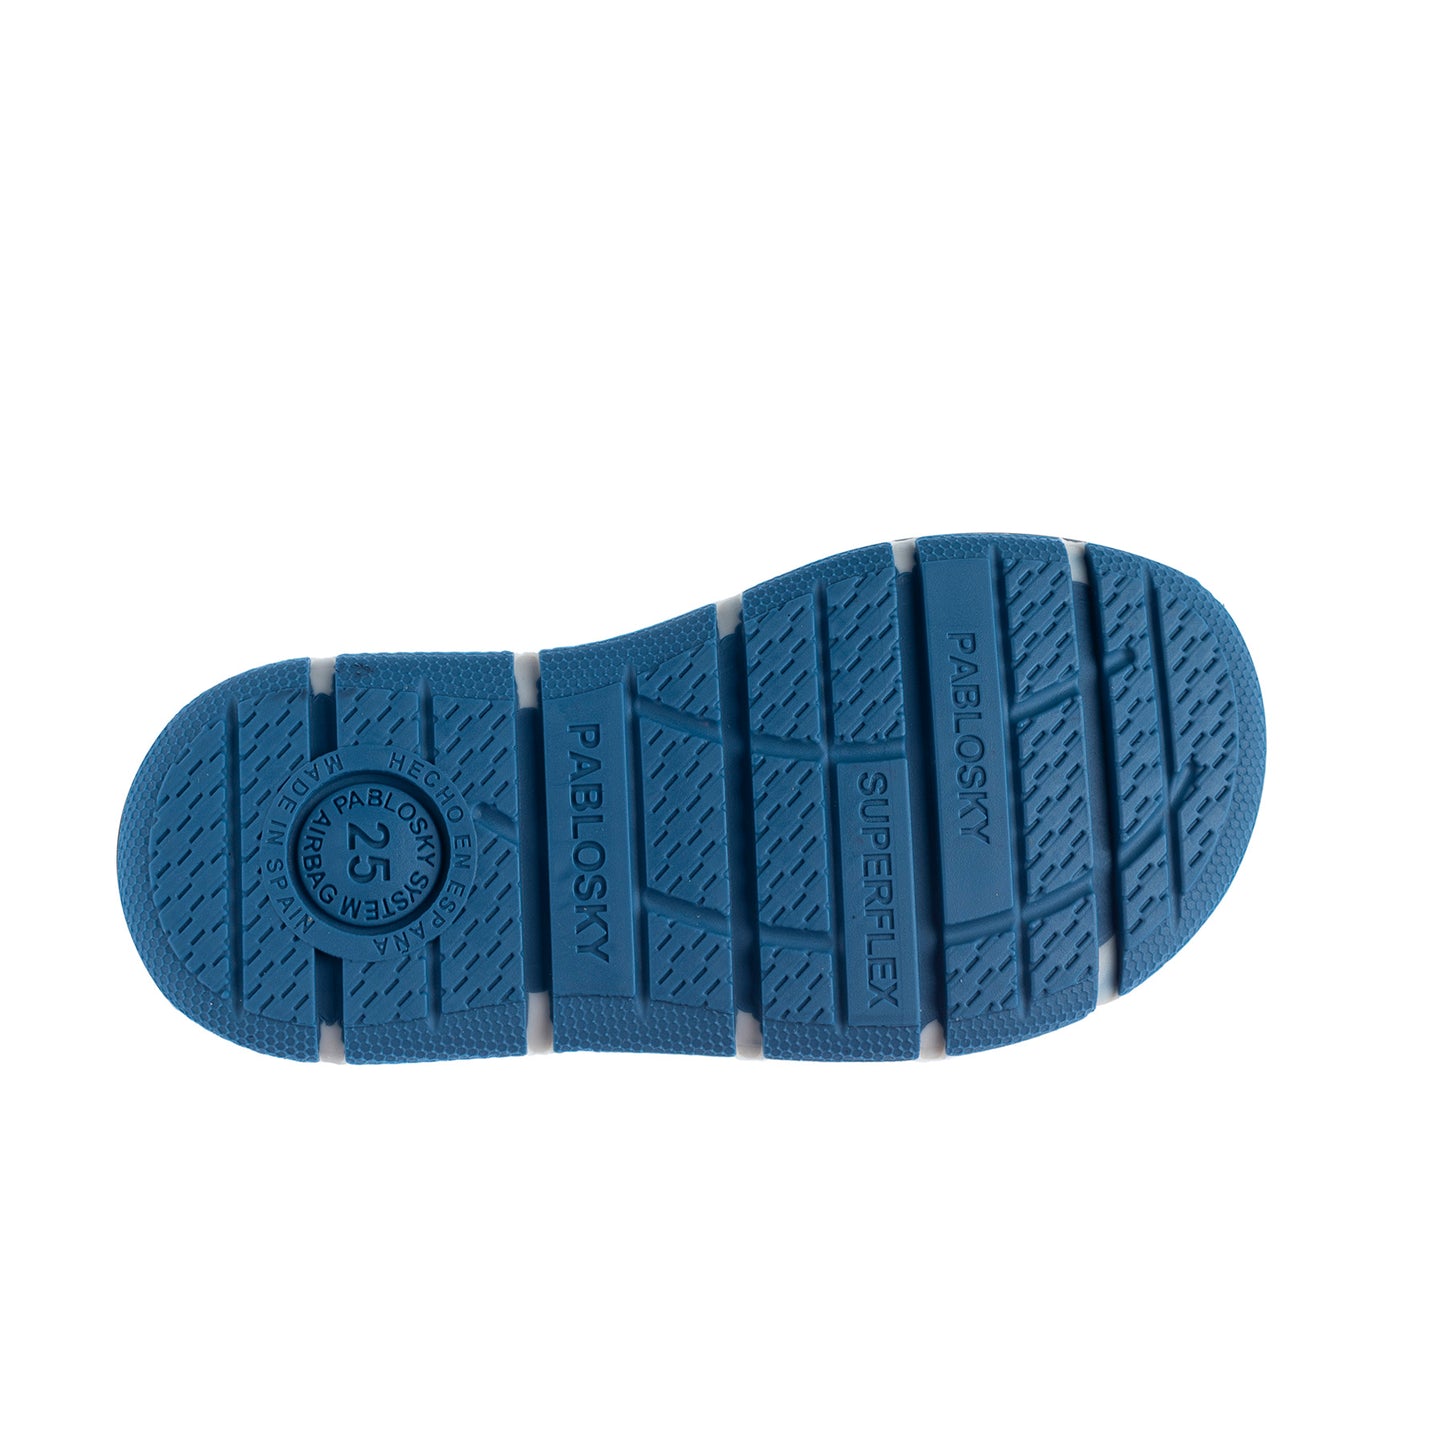 Pablosky Pampas Sandals / 510325